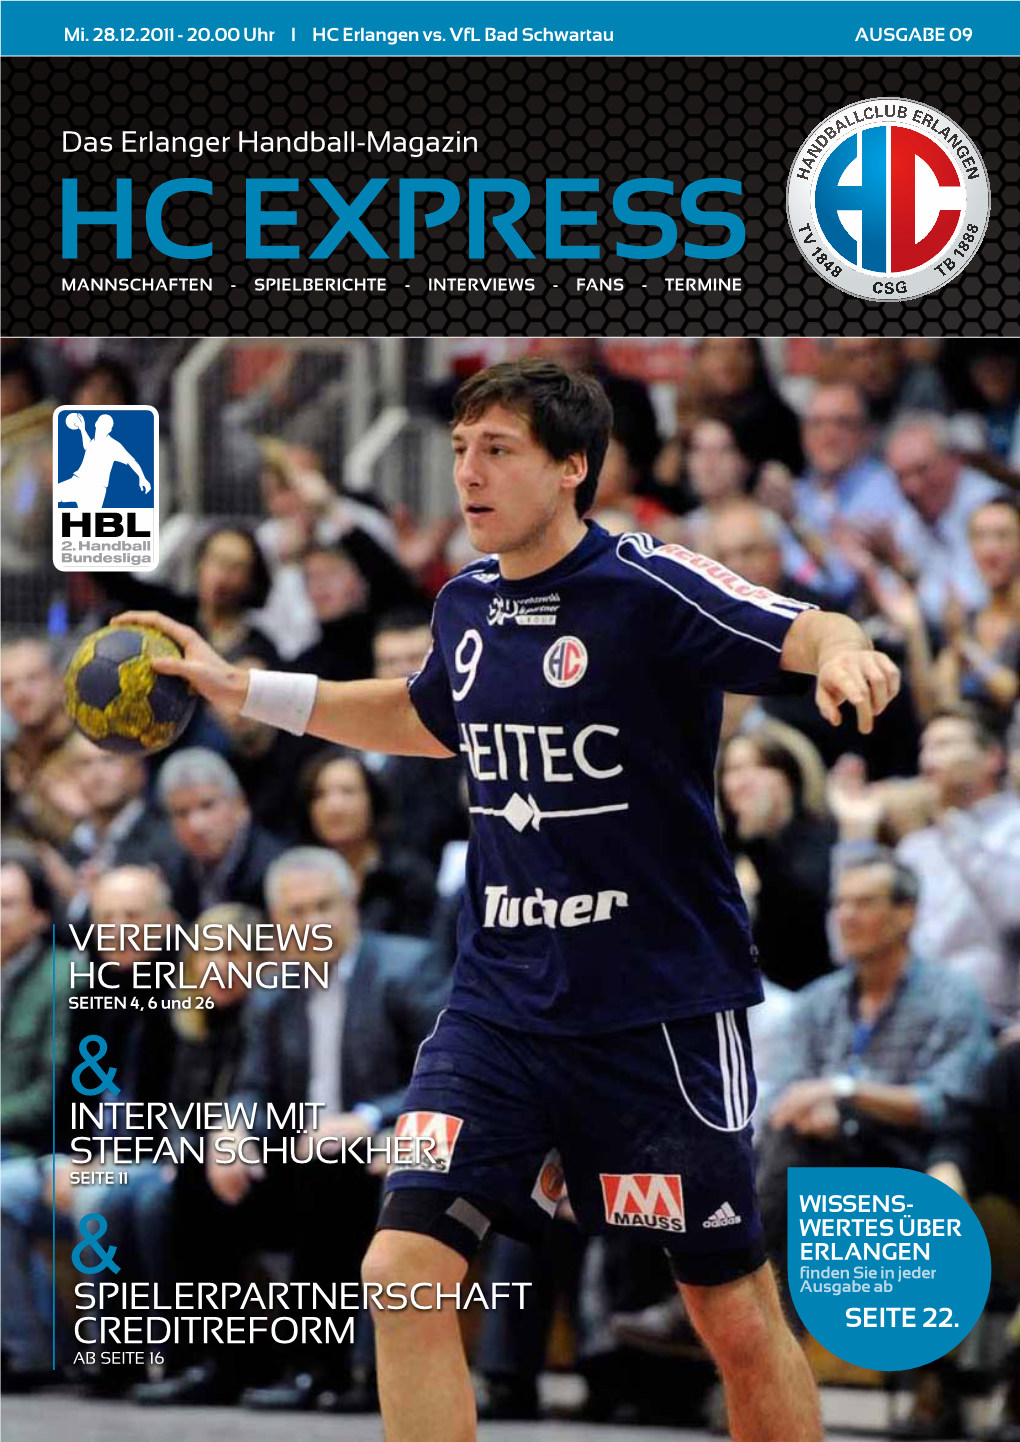 HC EXPRESS Mannschaften - Spielberichte - Interviews - Fans - Termine